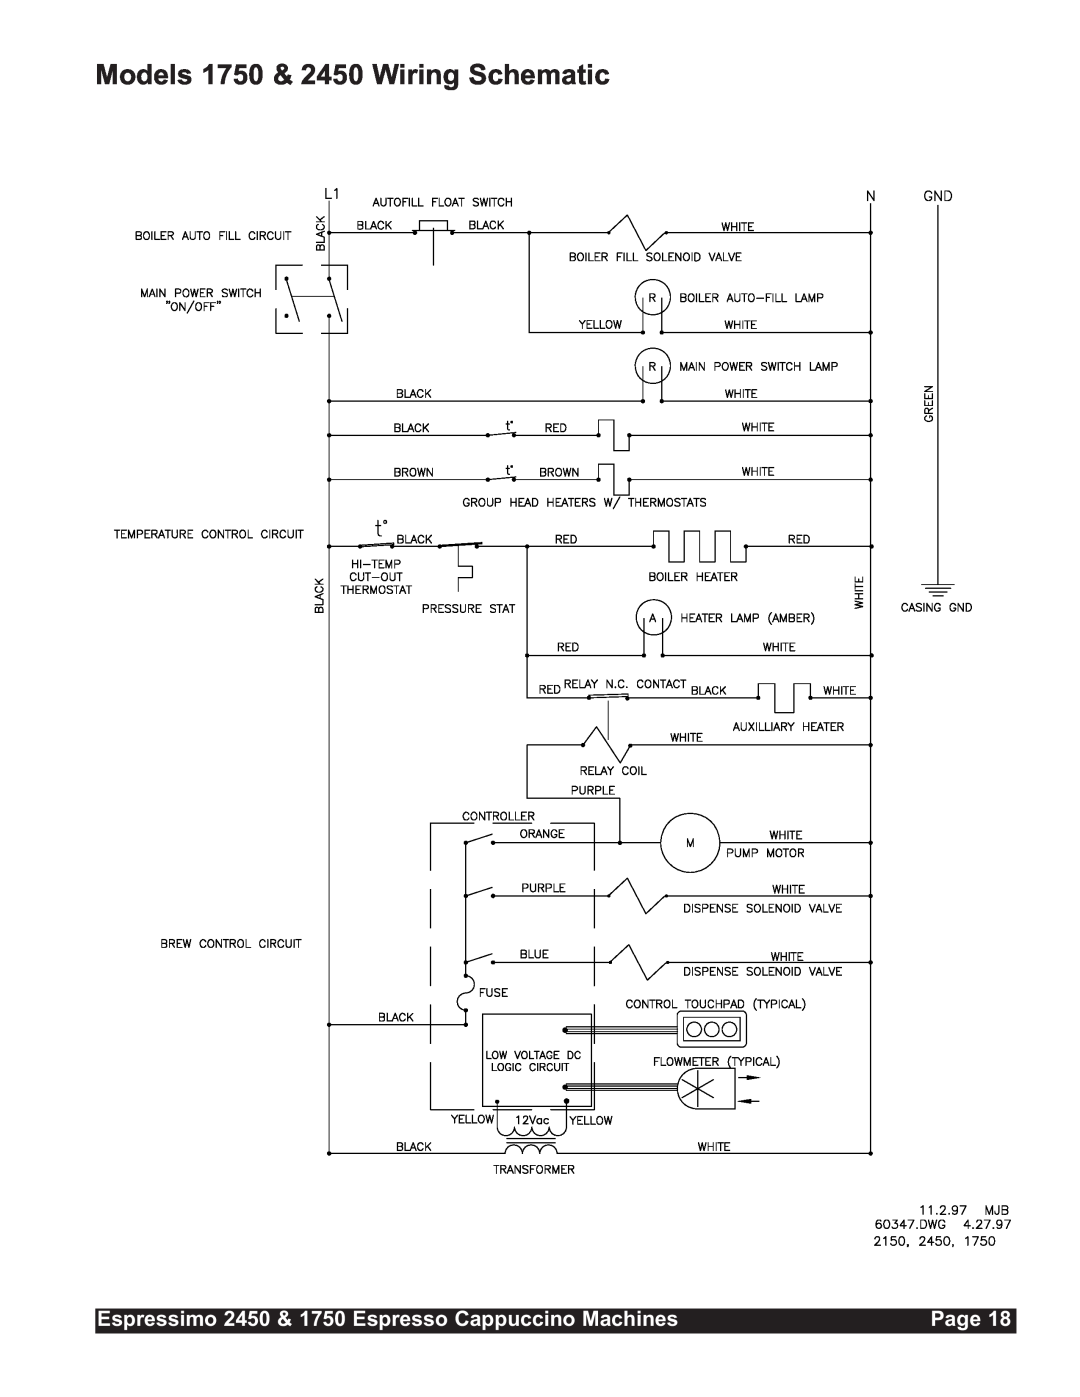 Grindmaster installation manual Models 1750 & 2450 Wiring Schematic, Page 